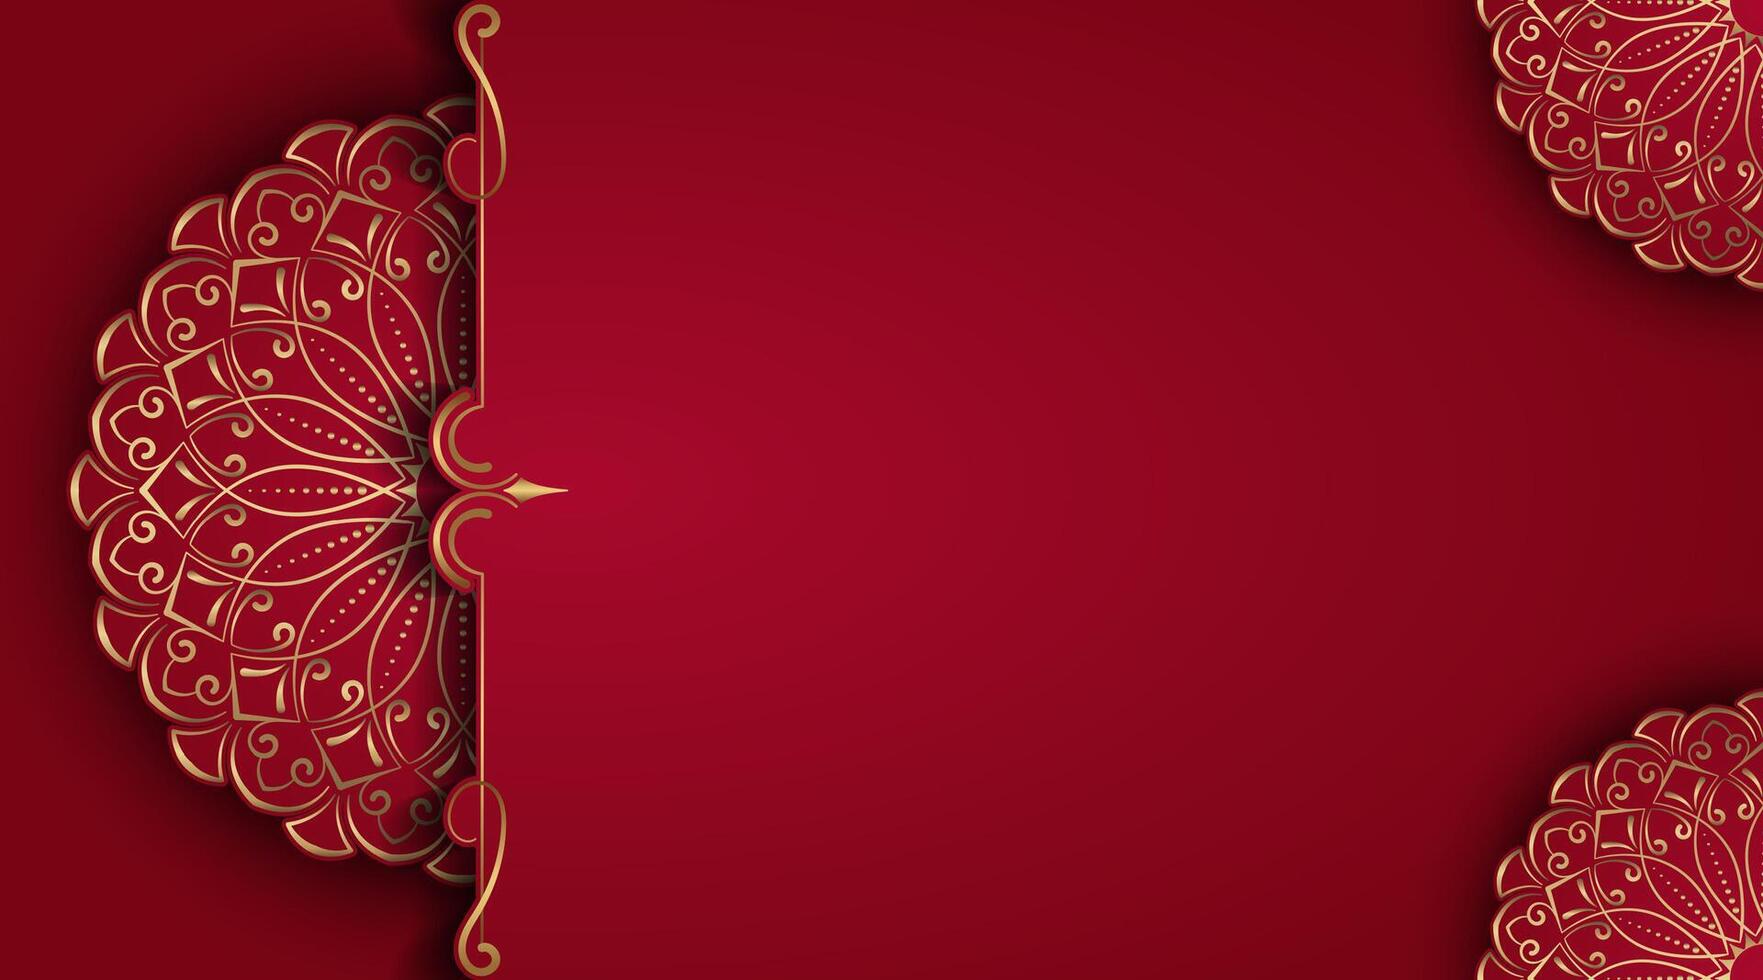 rot Luxus Hintergrund mit Mandala Ornament vektor